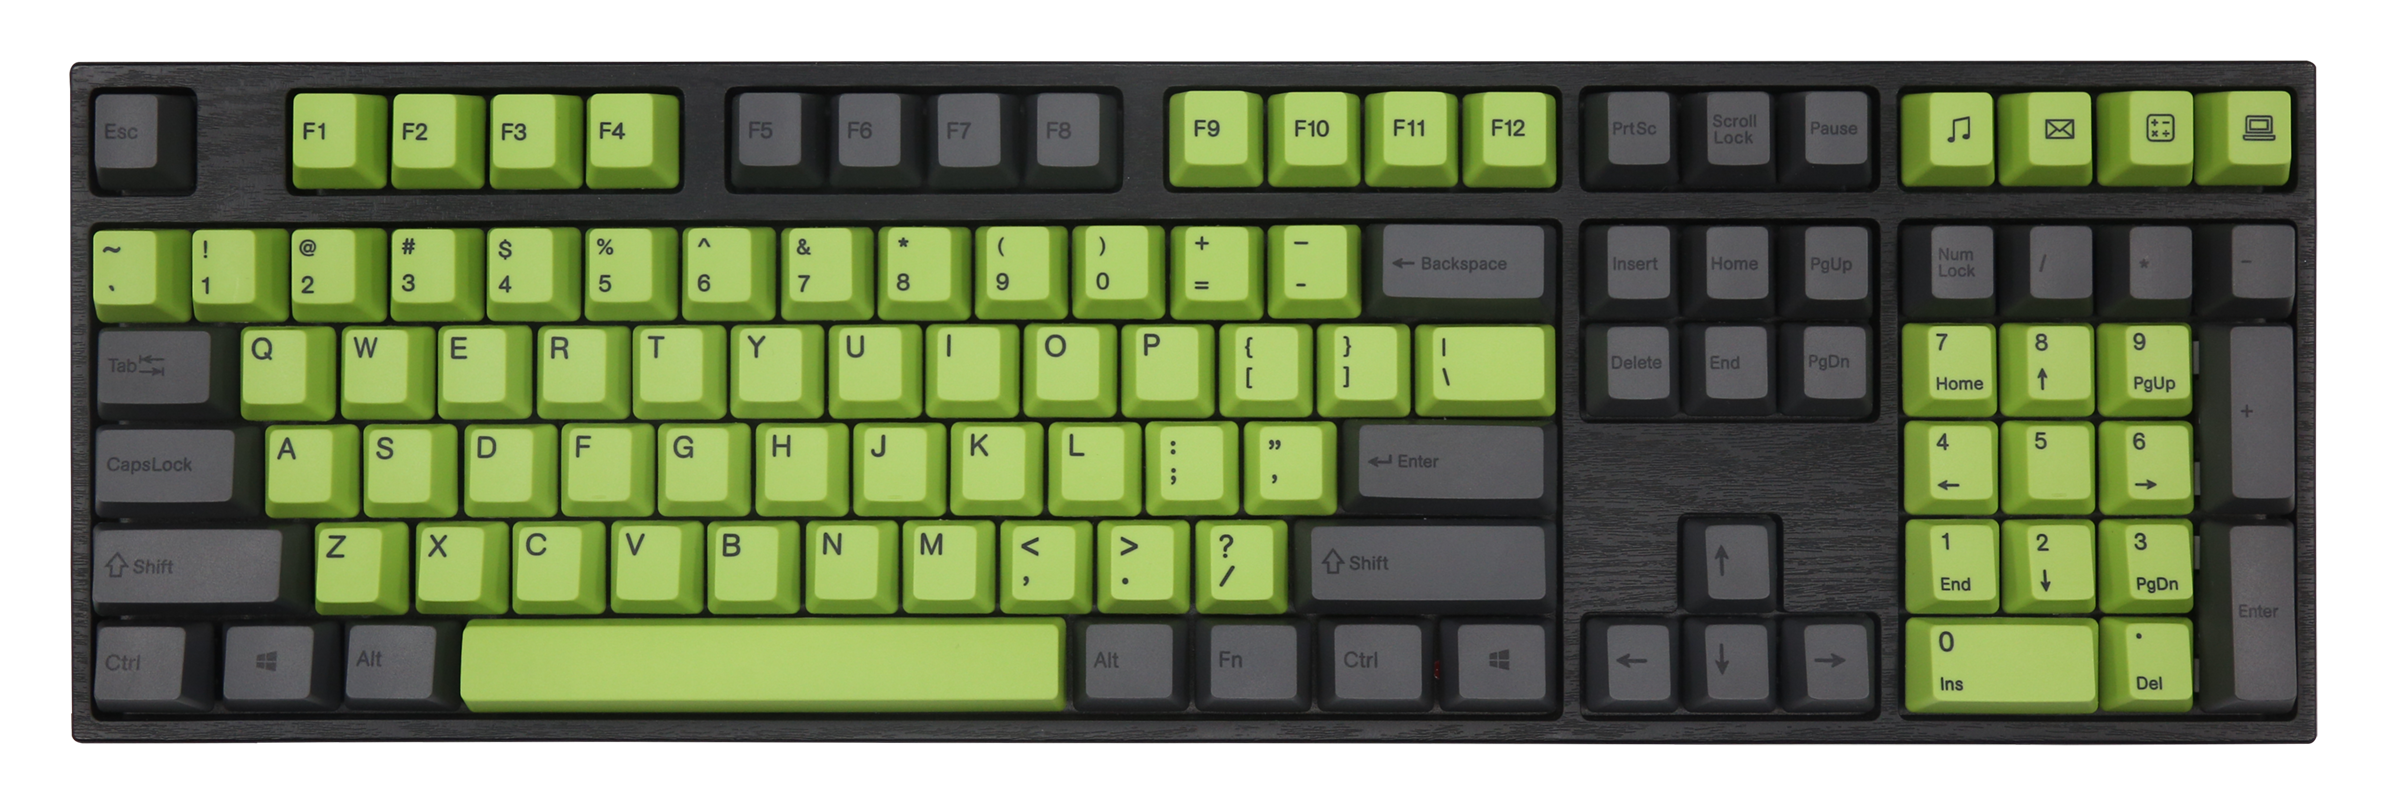 Varmilo 108-Key Dye Sub PBT Keycap Set Green and Black MKPK08VFV6 |58930|